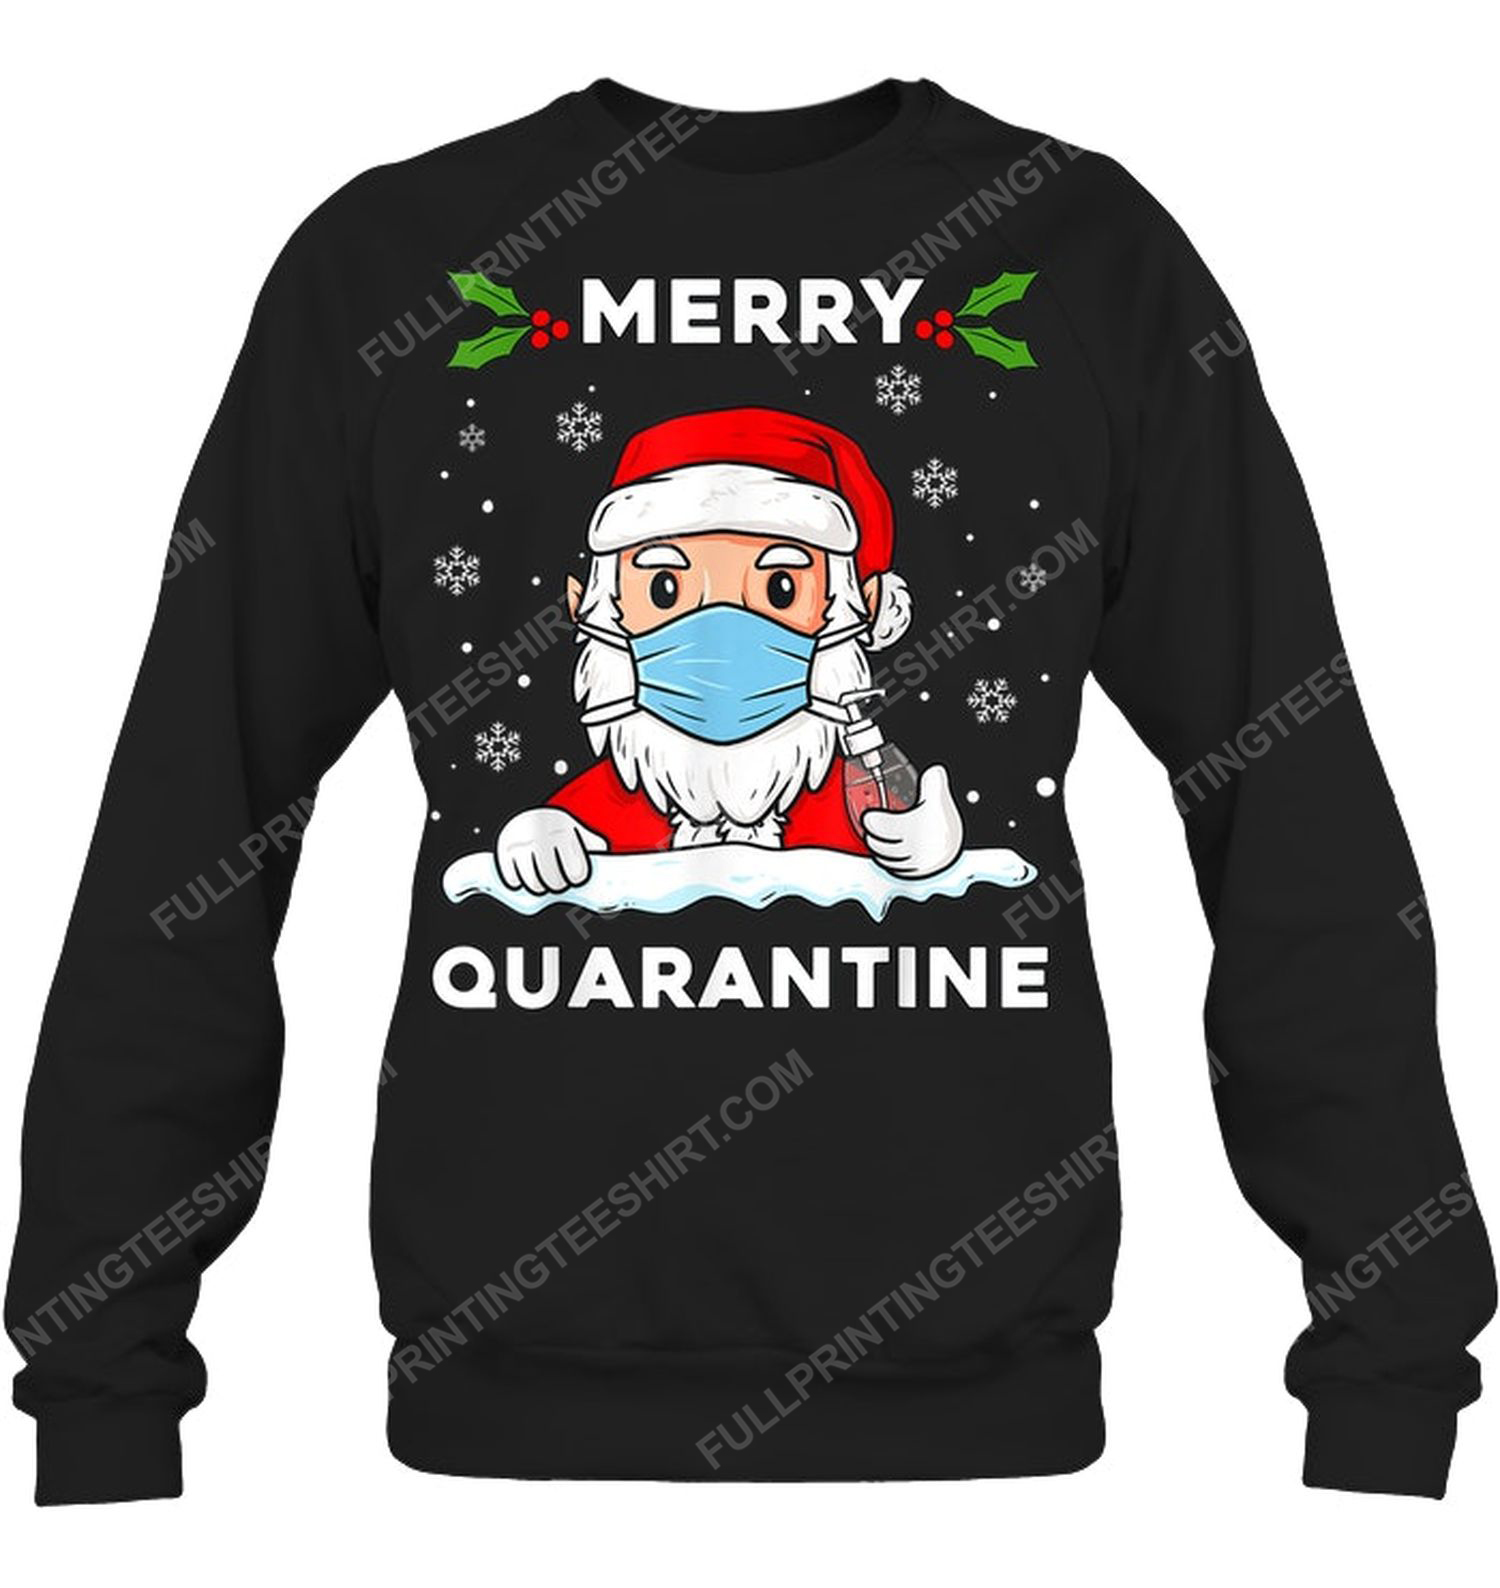 Merry quarantine christmas santa claus sweatshirt